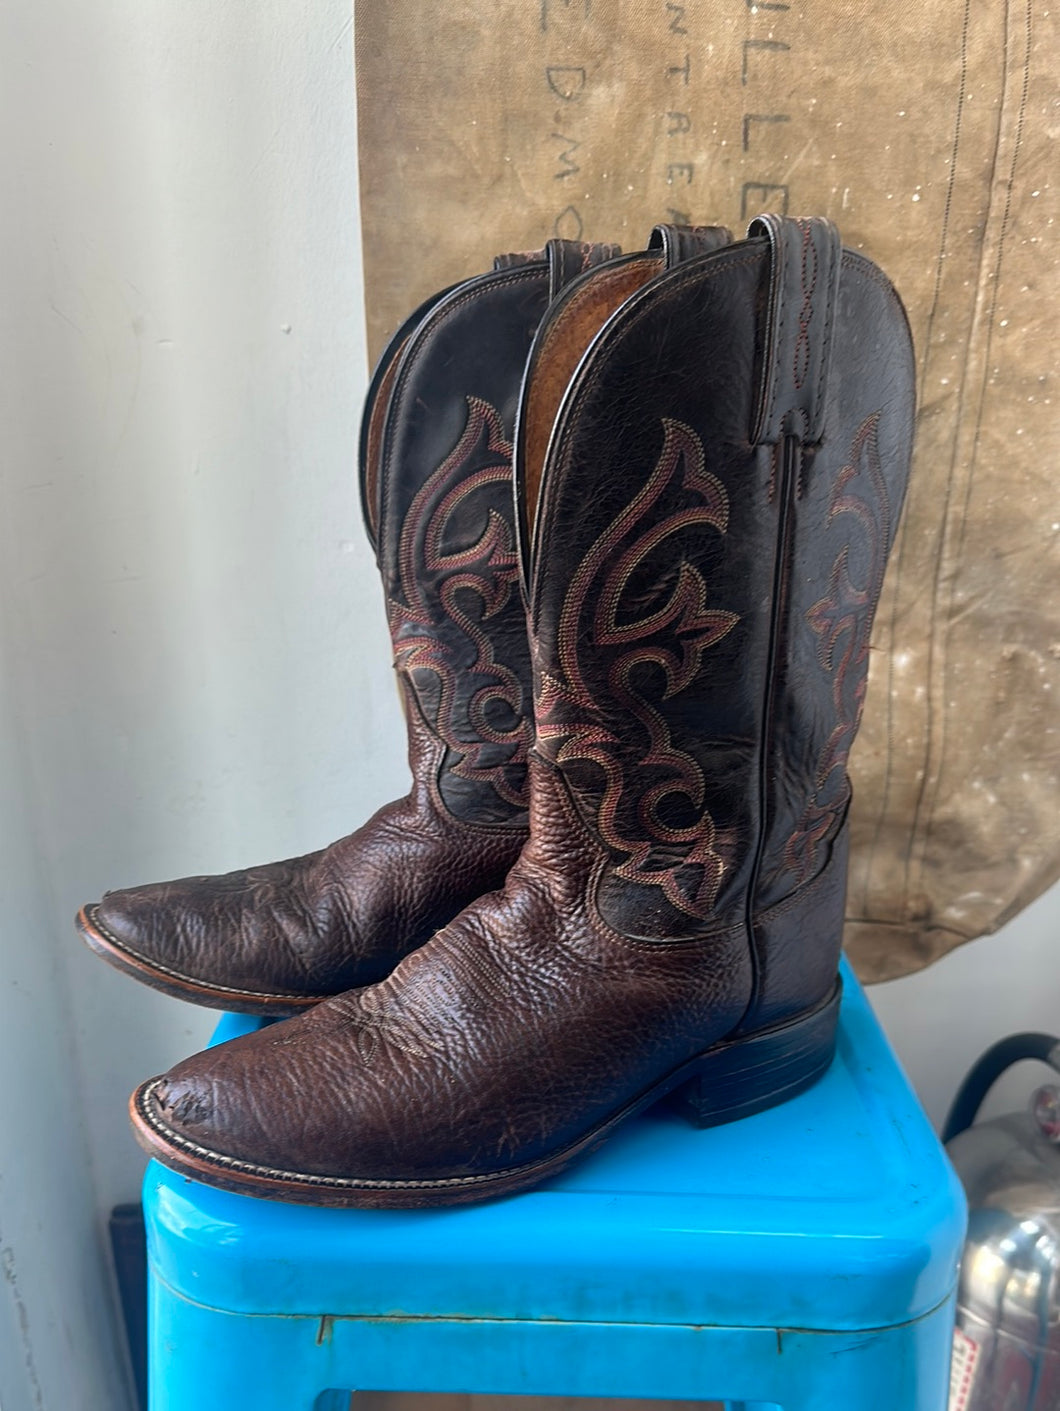 Tony Lama Cowboy Boots - Dark Brown - Size 9 M 10.5 W